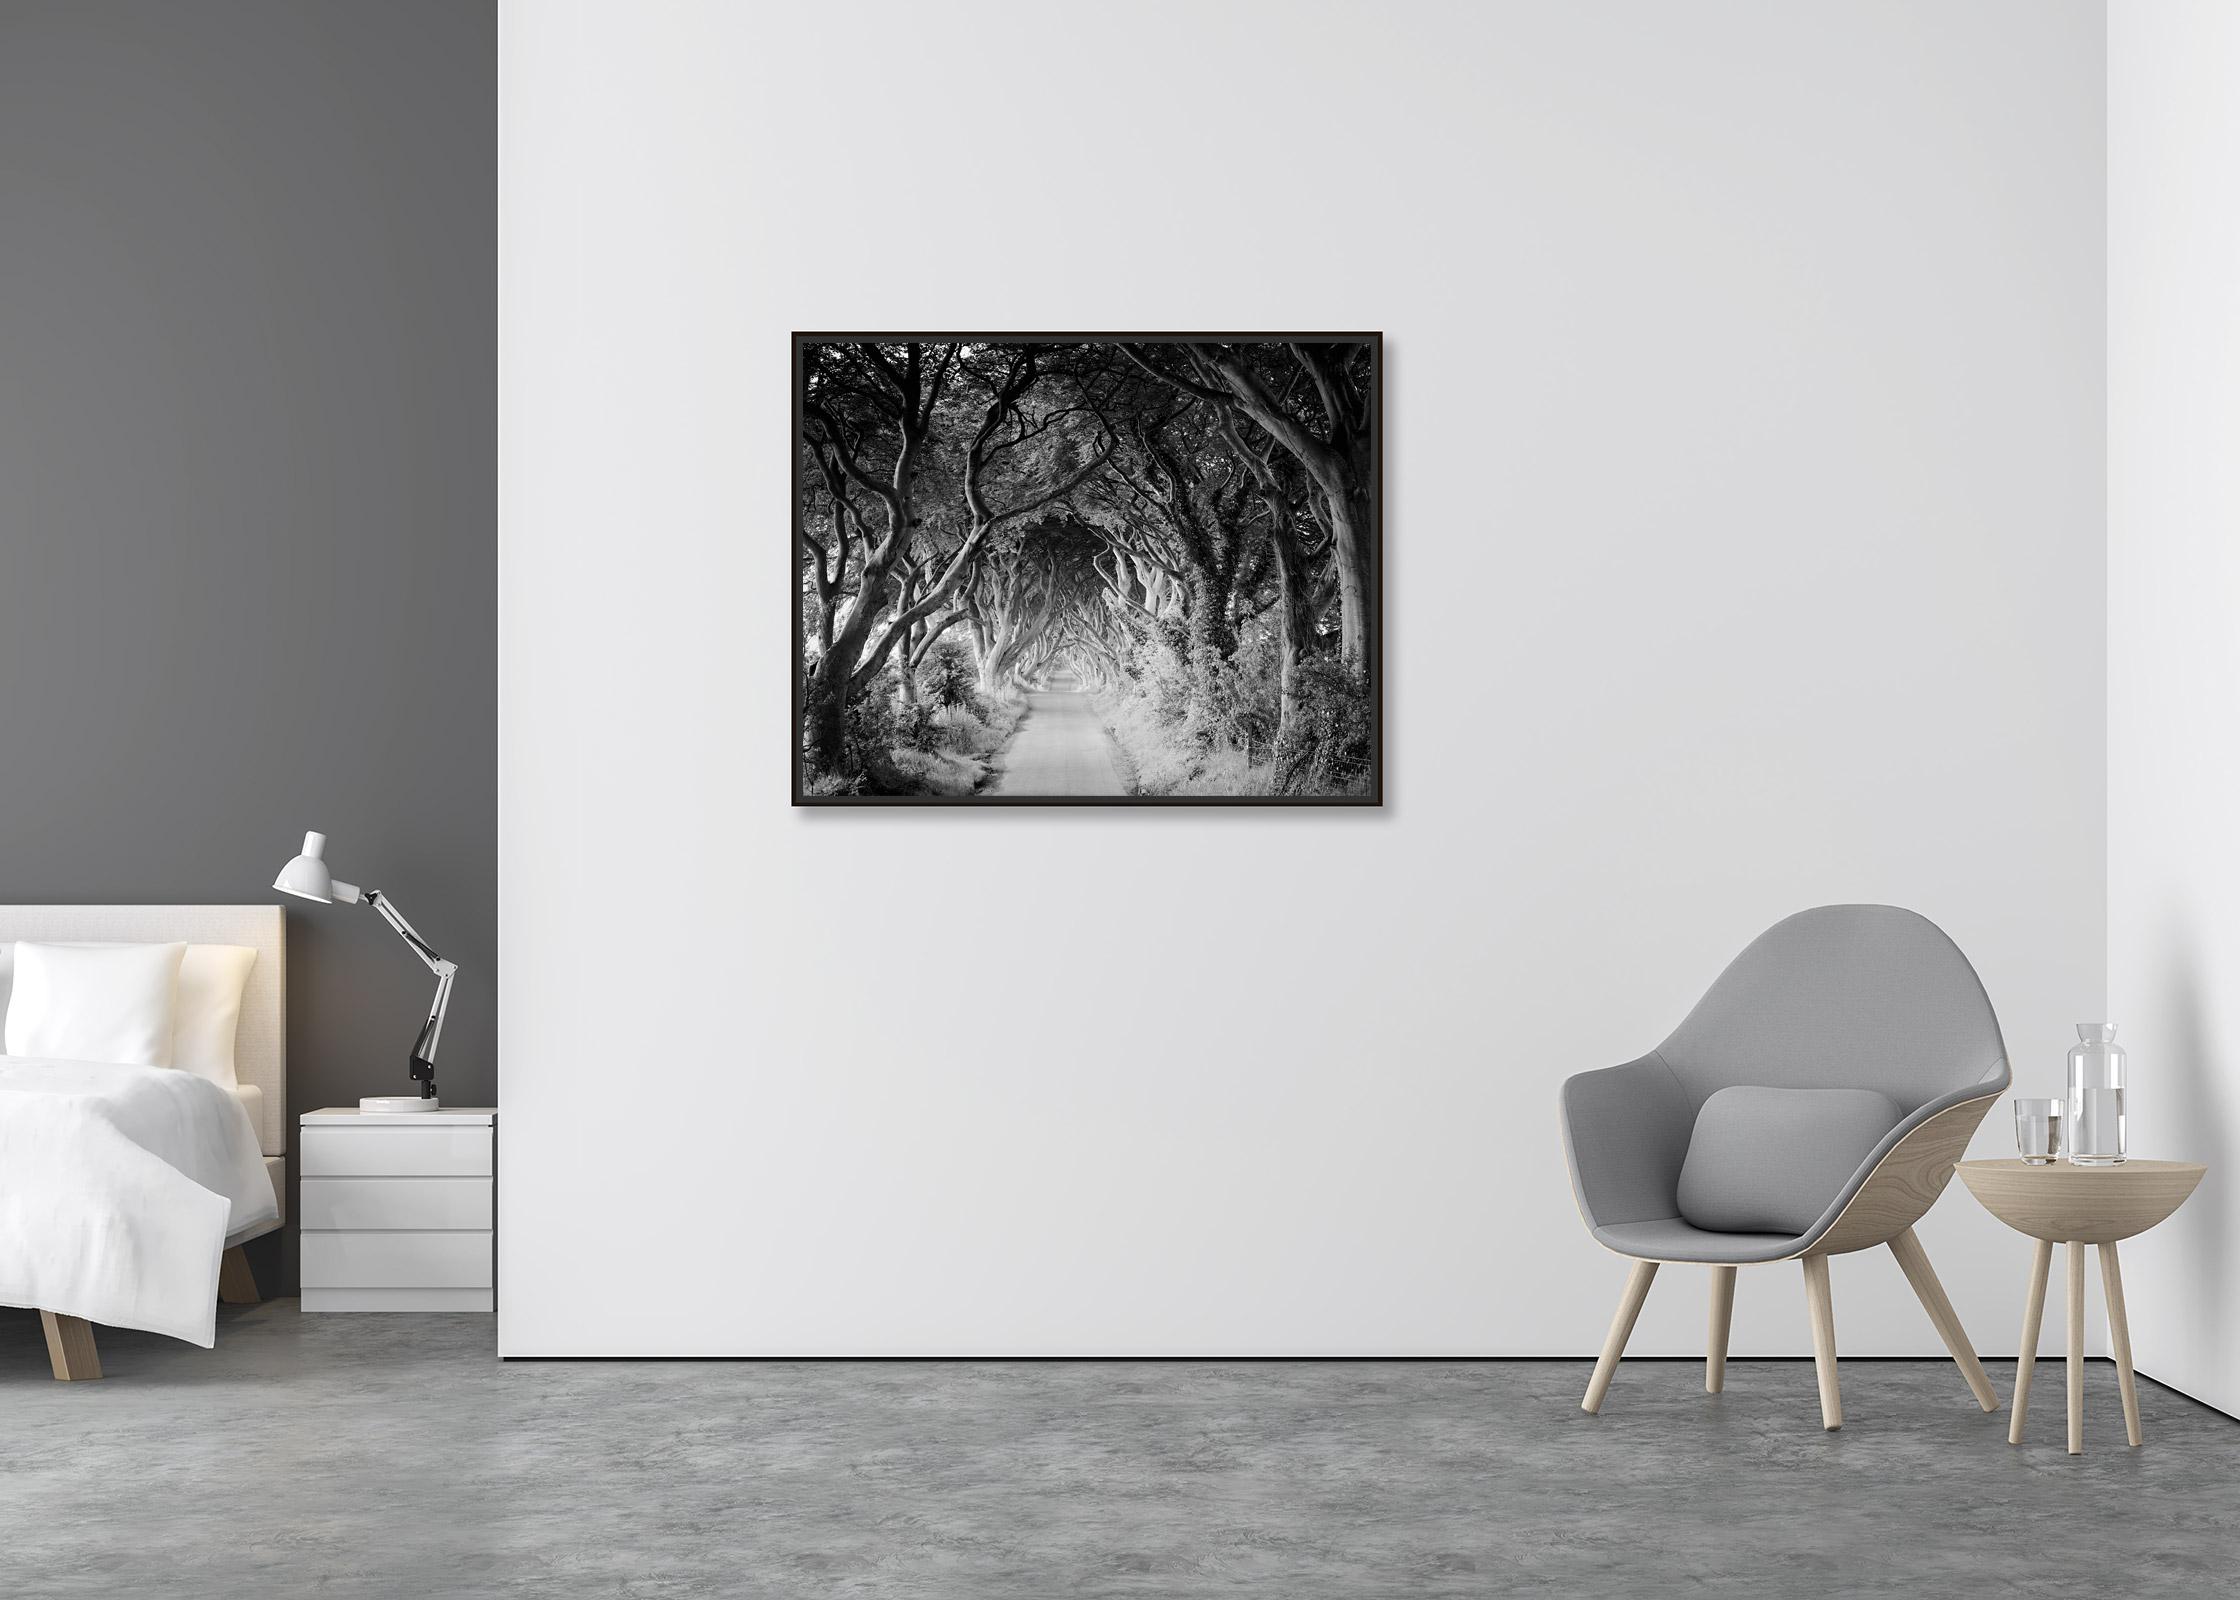 Dark Hedges, beeche, trees, Ireland, black and white art landscape photography - Contemporain Photograph par Gerald Berghammer